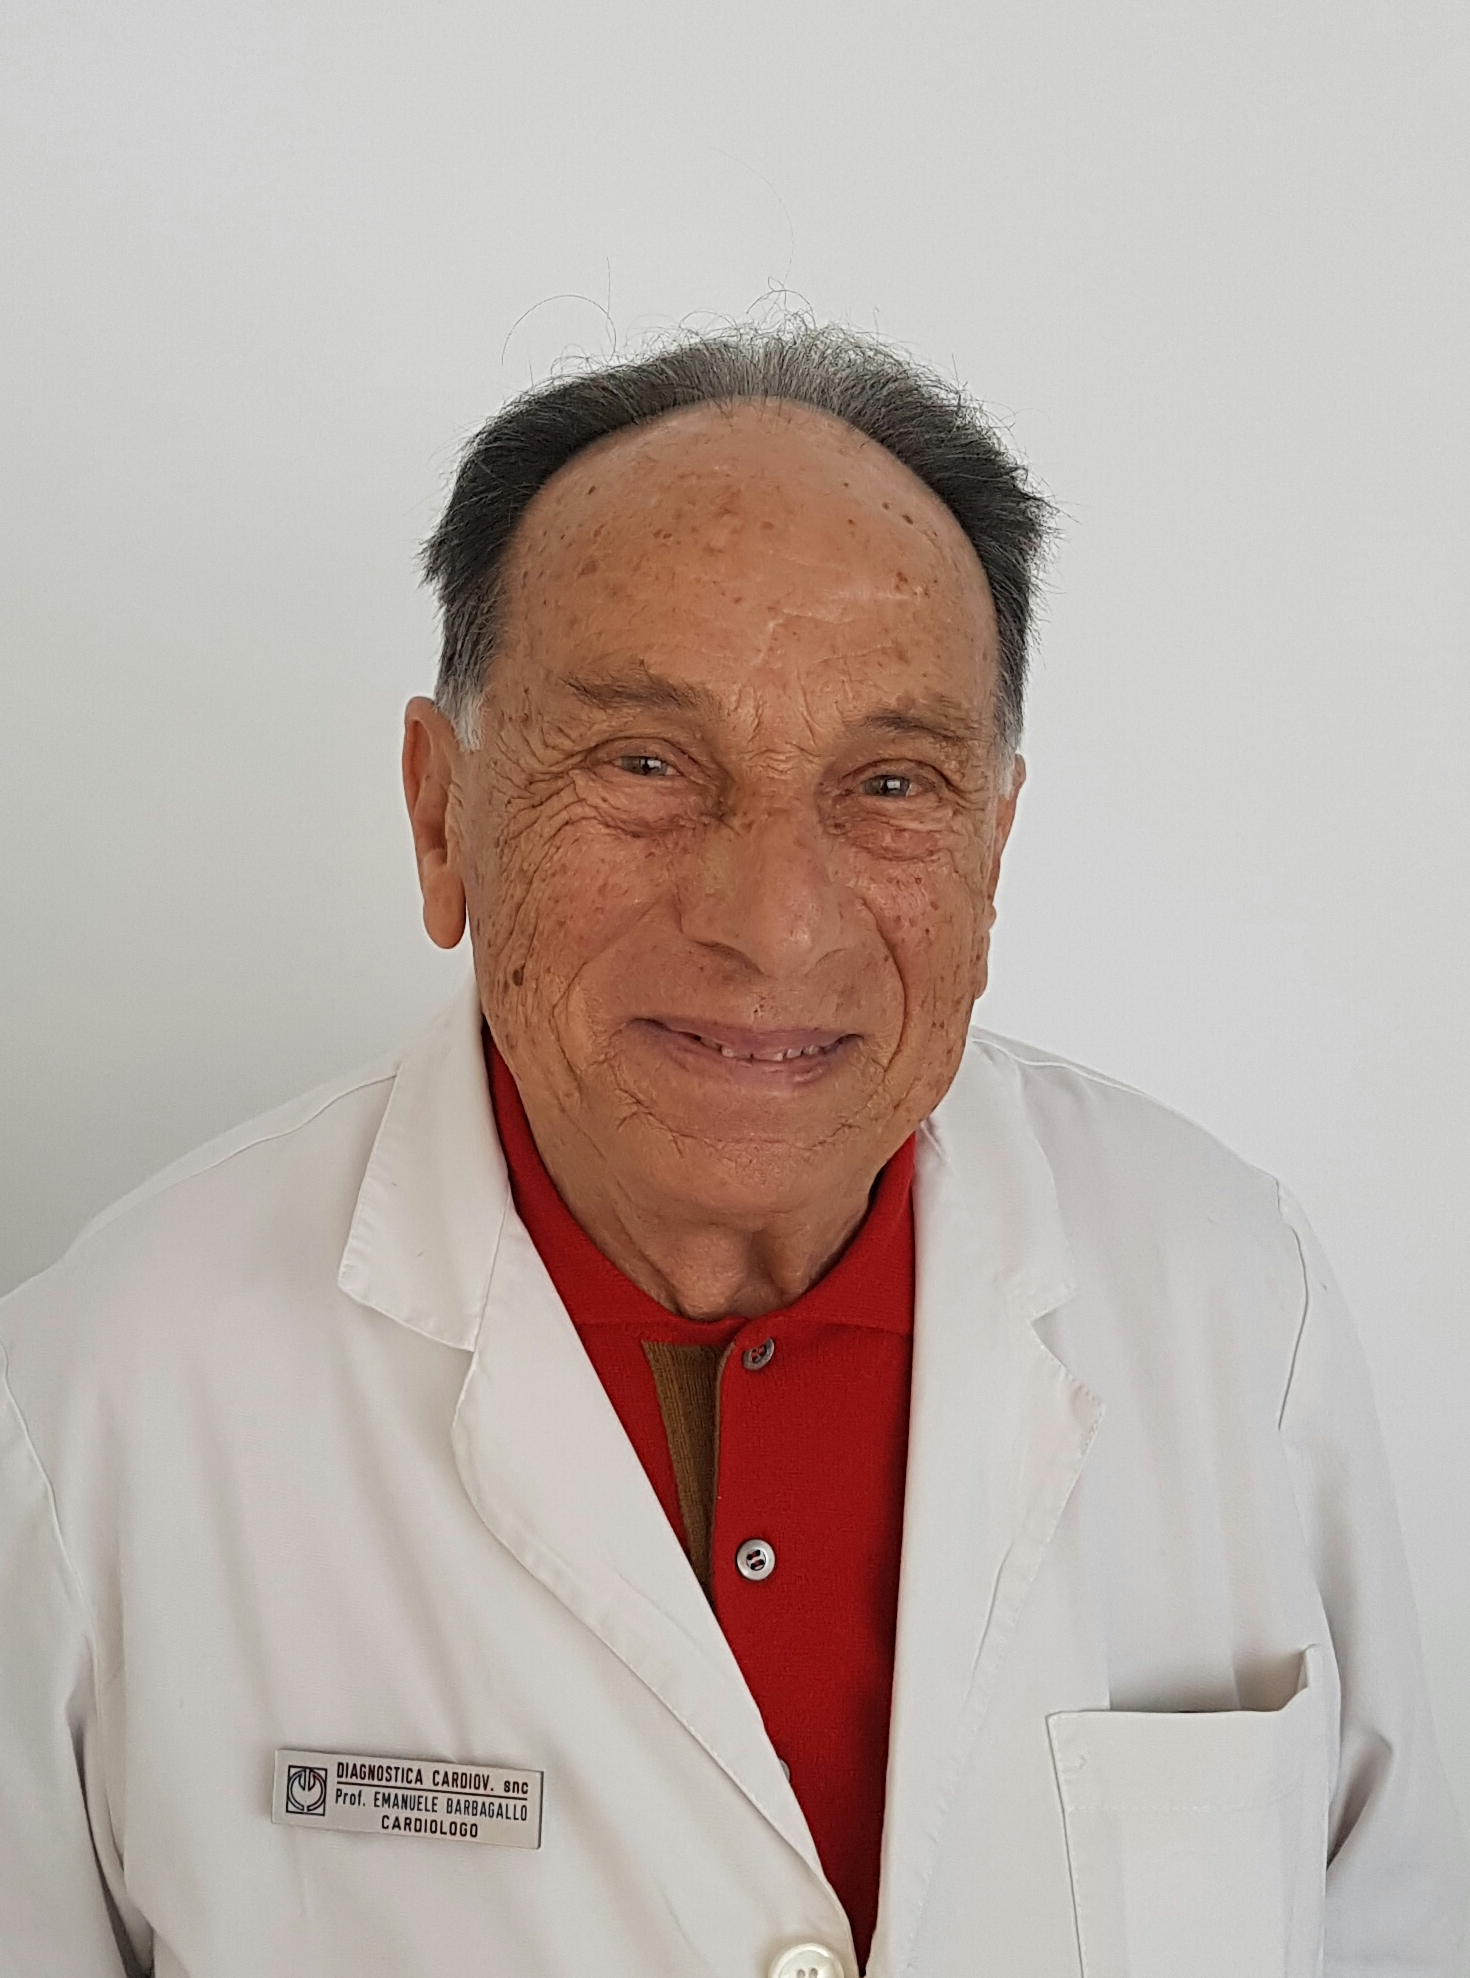 Dr. Barbagallo Emanuele - Cardiologo.jpg